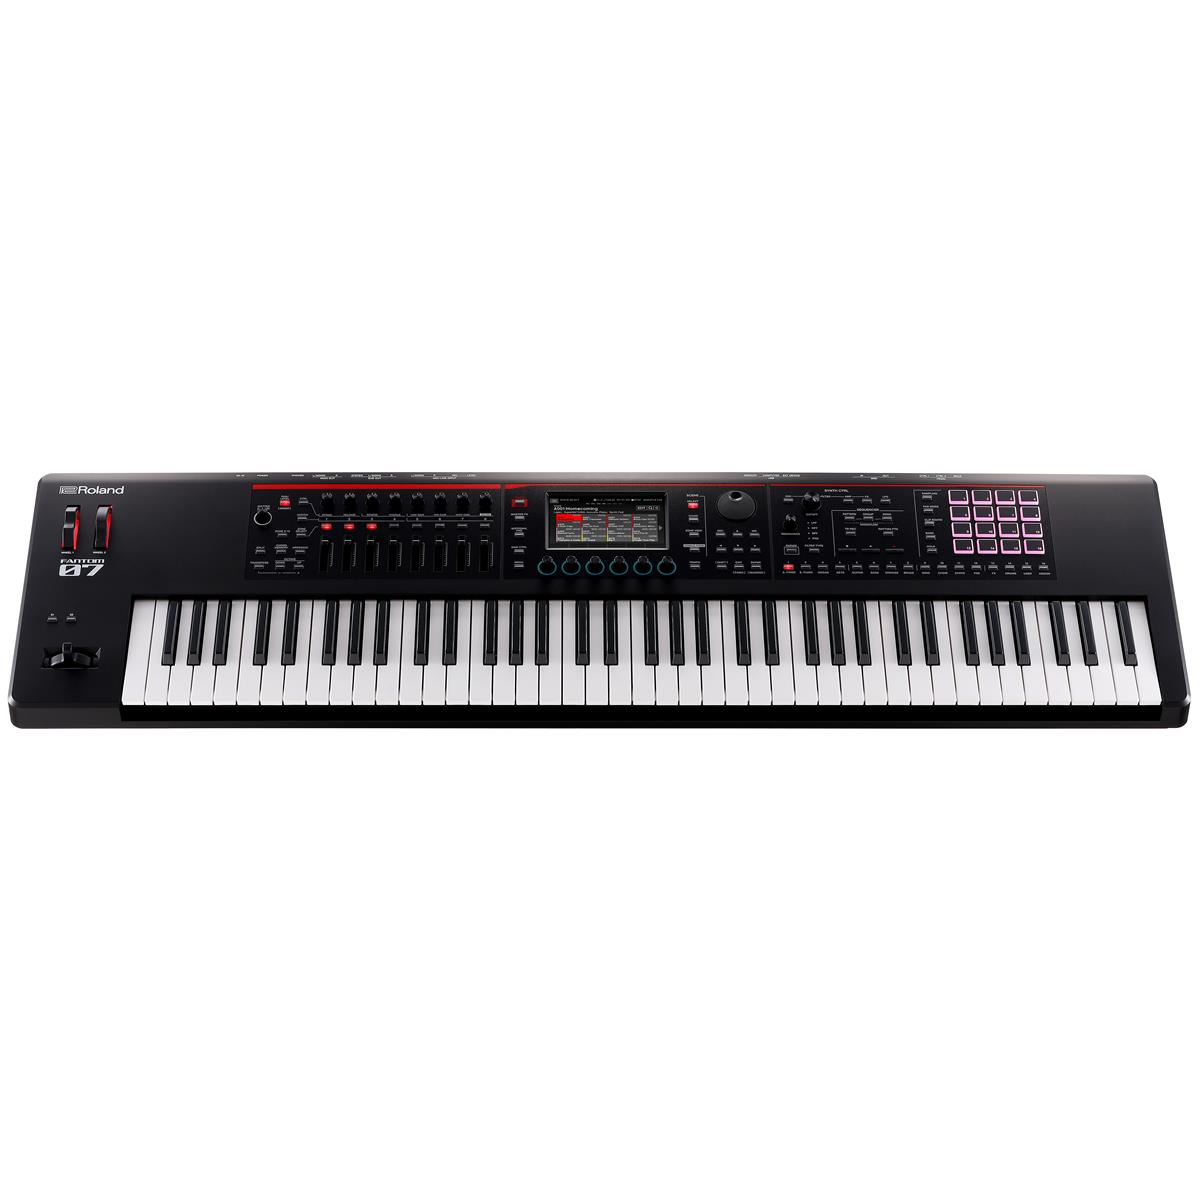 Roland Fantom-07 76-Note Music Work Station Keyboard $1349 + free s/h